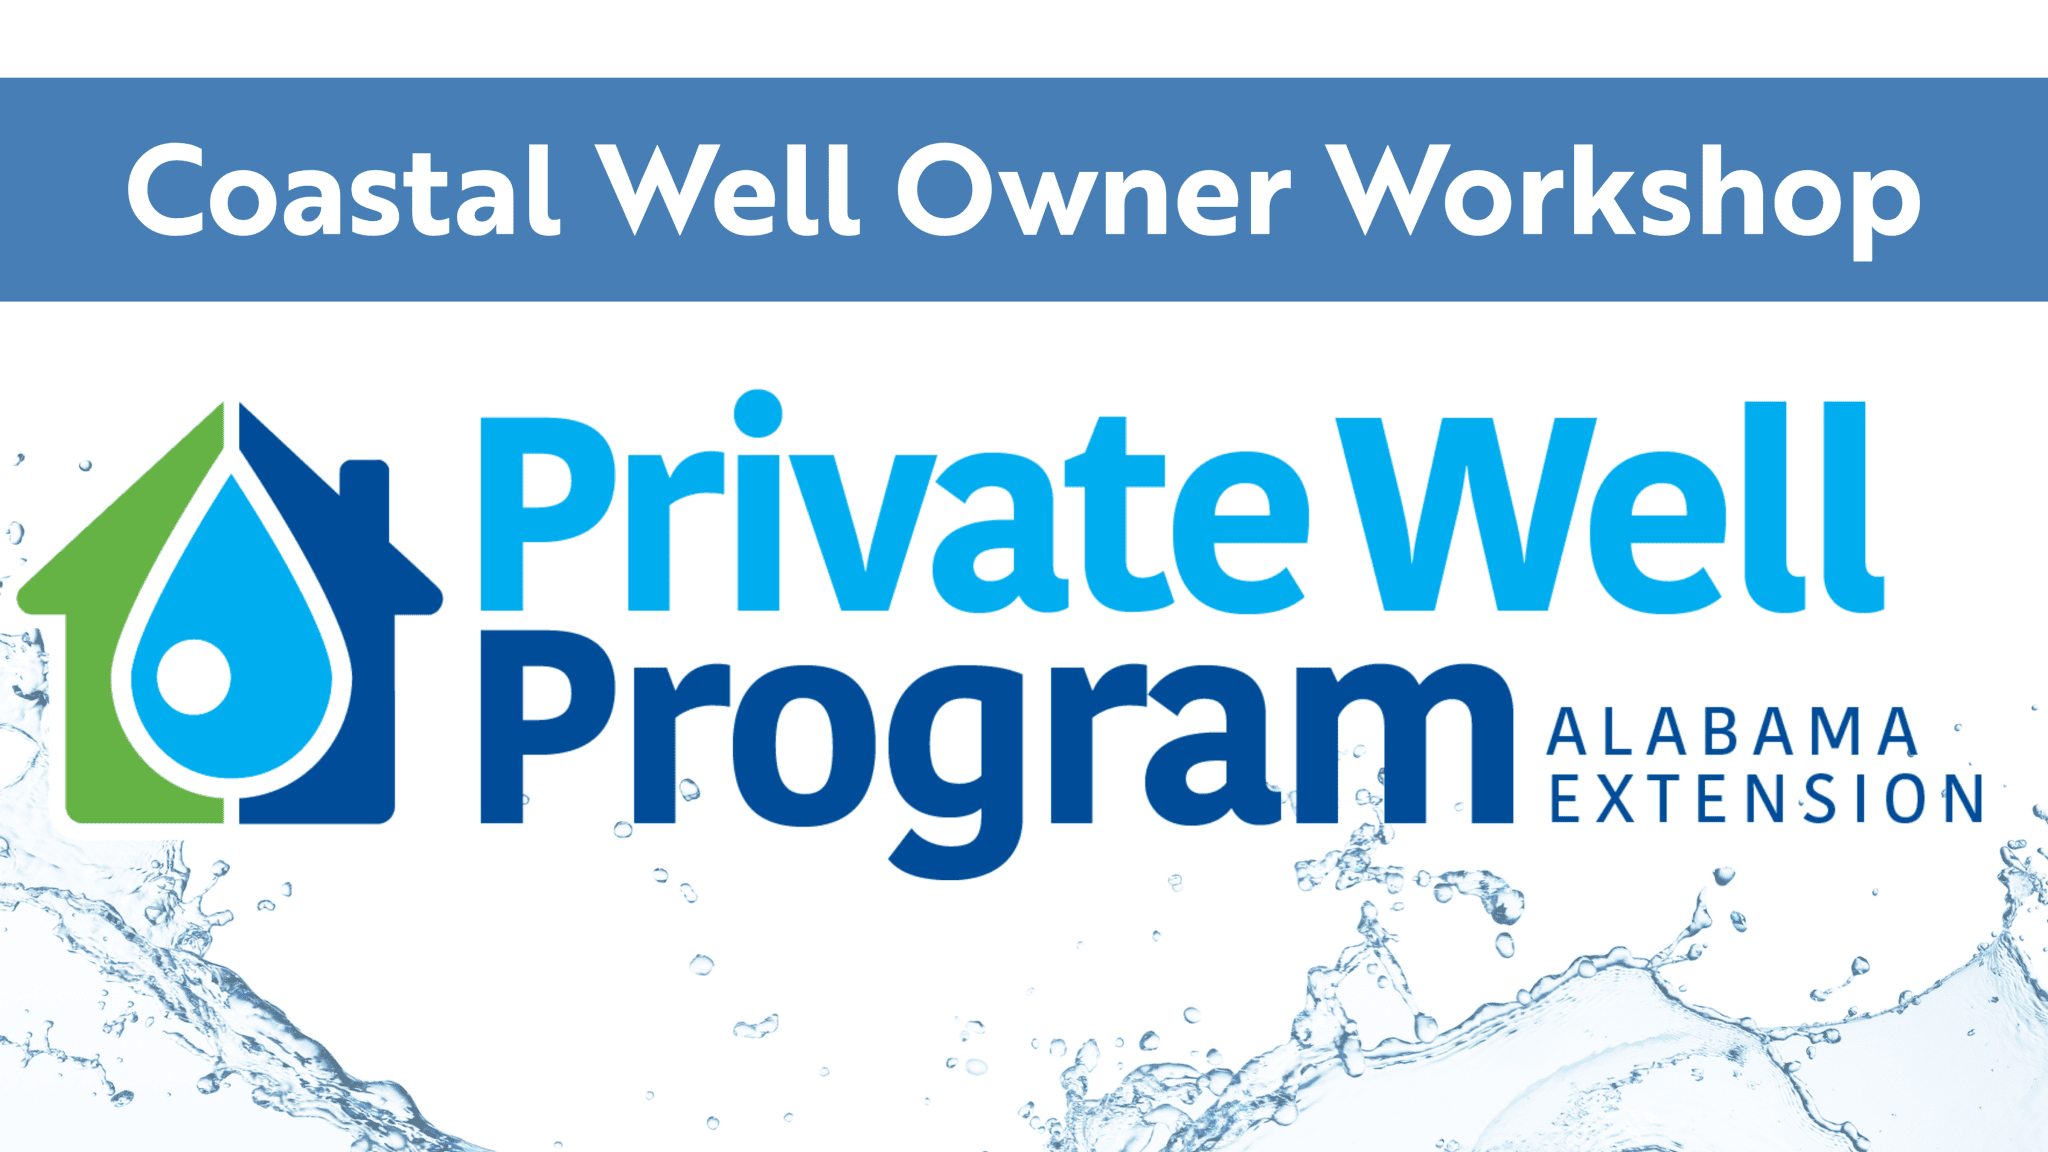 Coastal Well Owner Workshop – Private Well Program